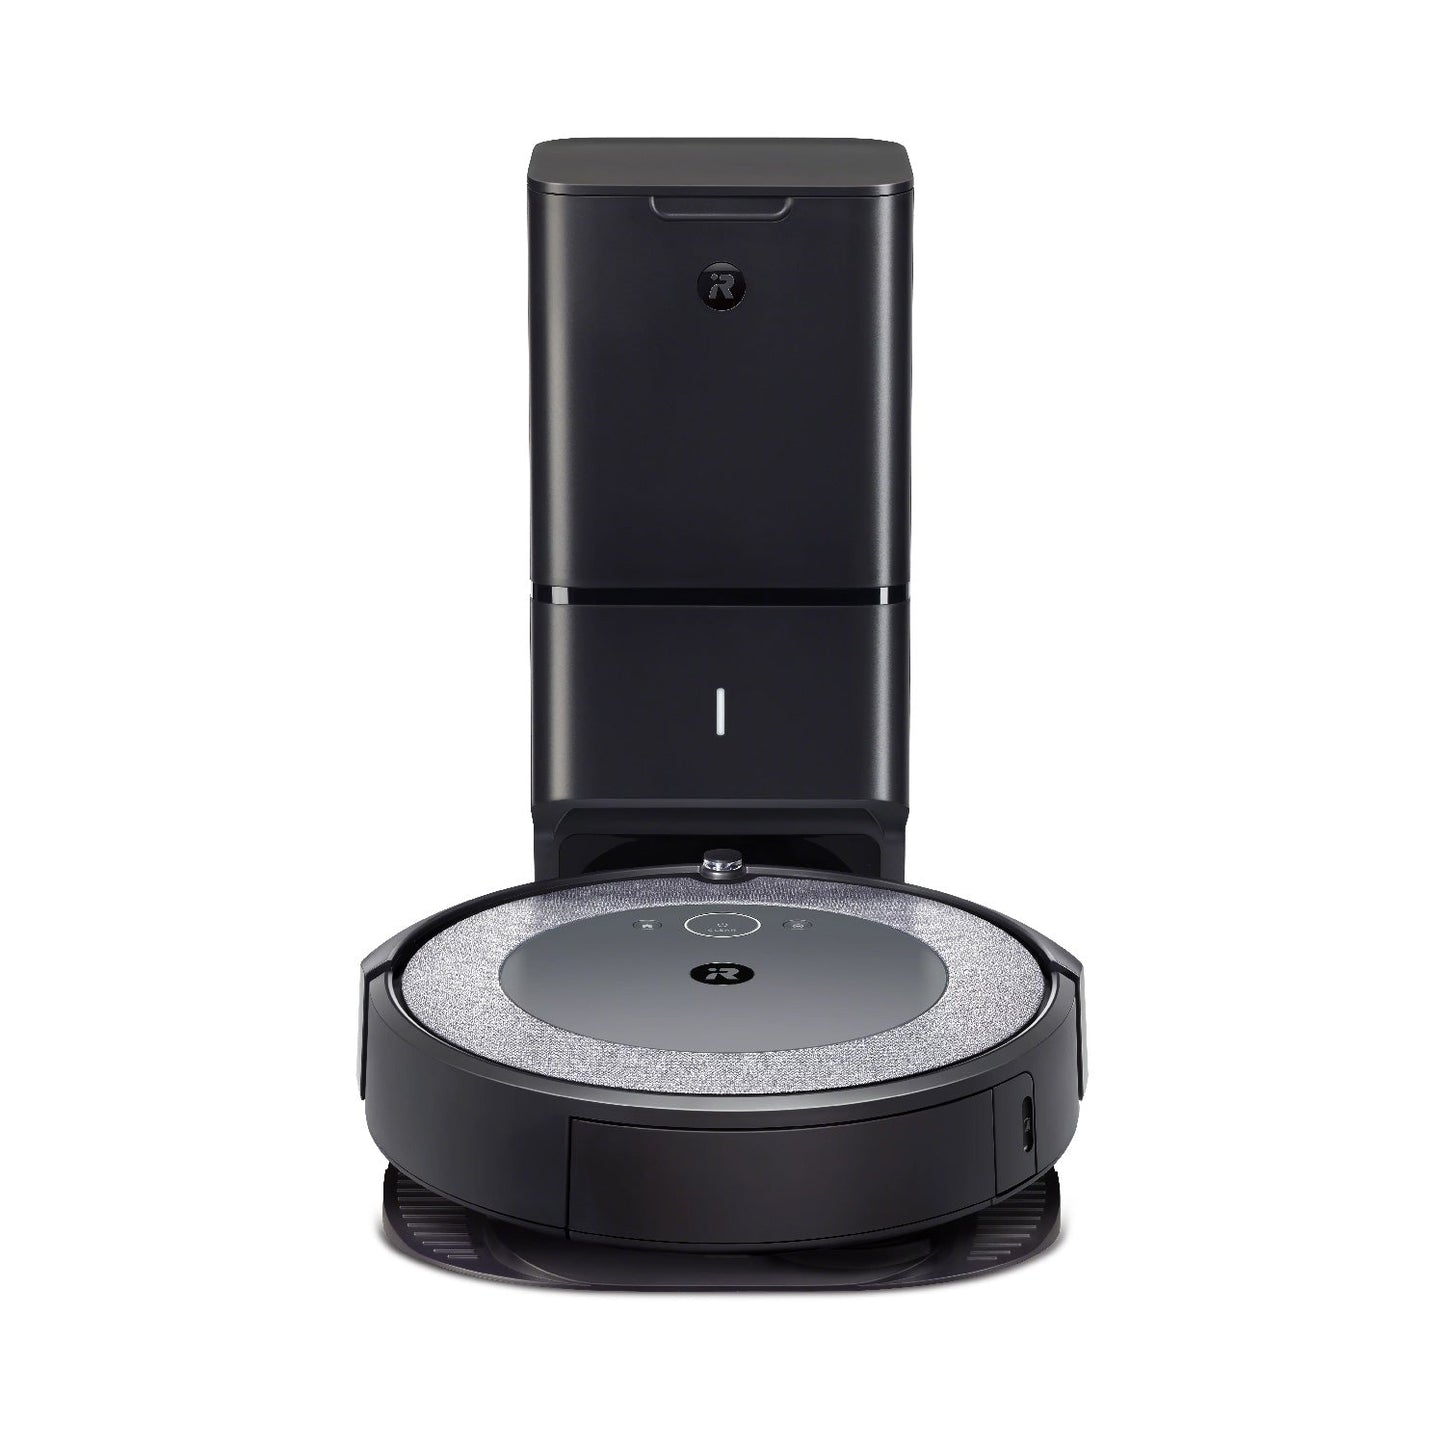 Aspiradora Robot Roomba I3+ Irobot4#Negro